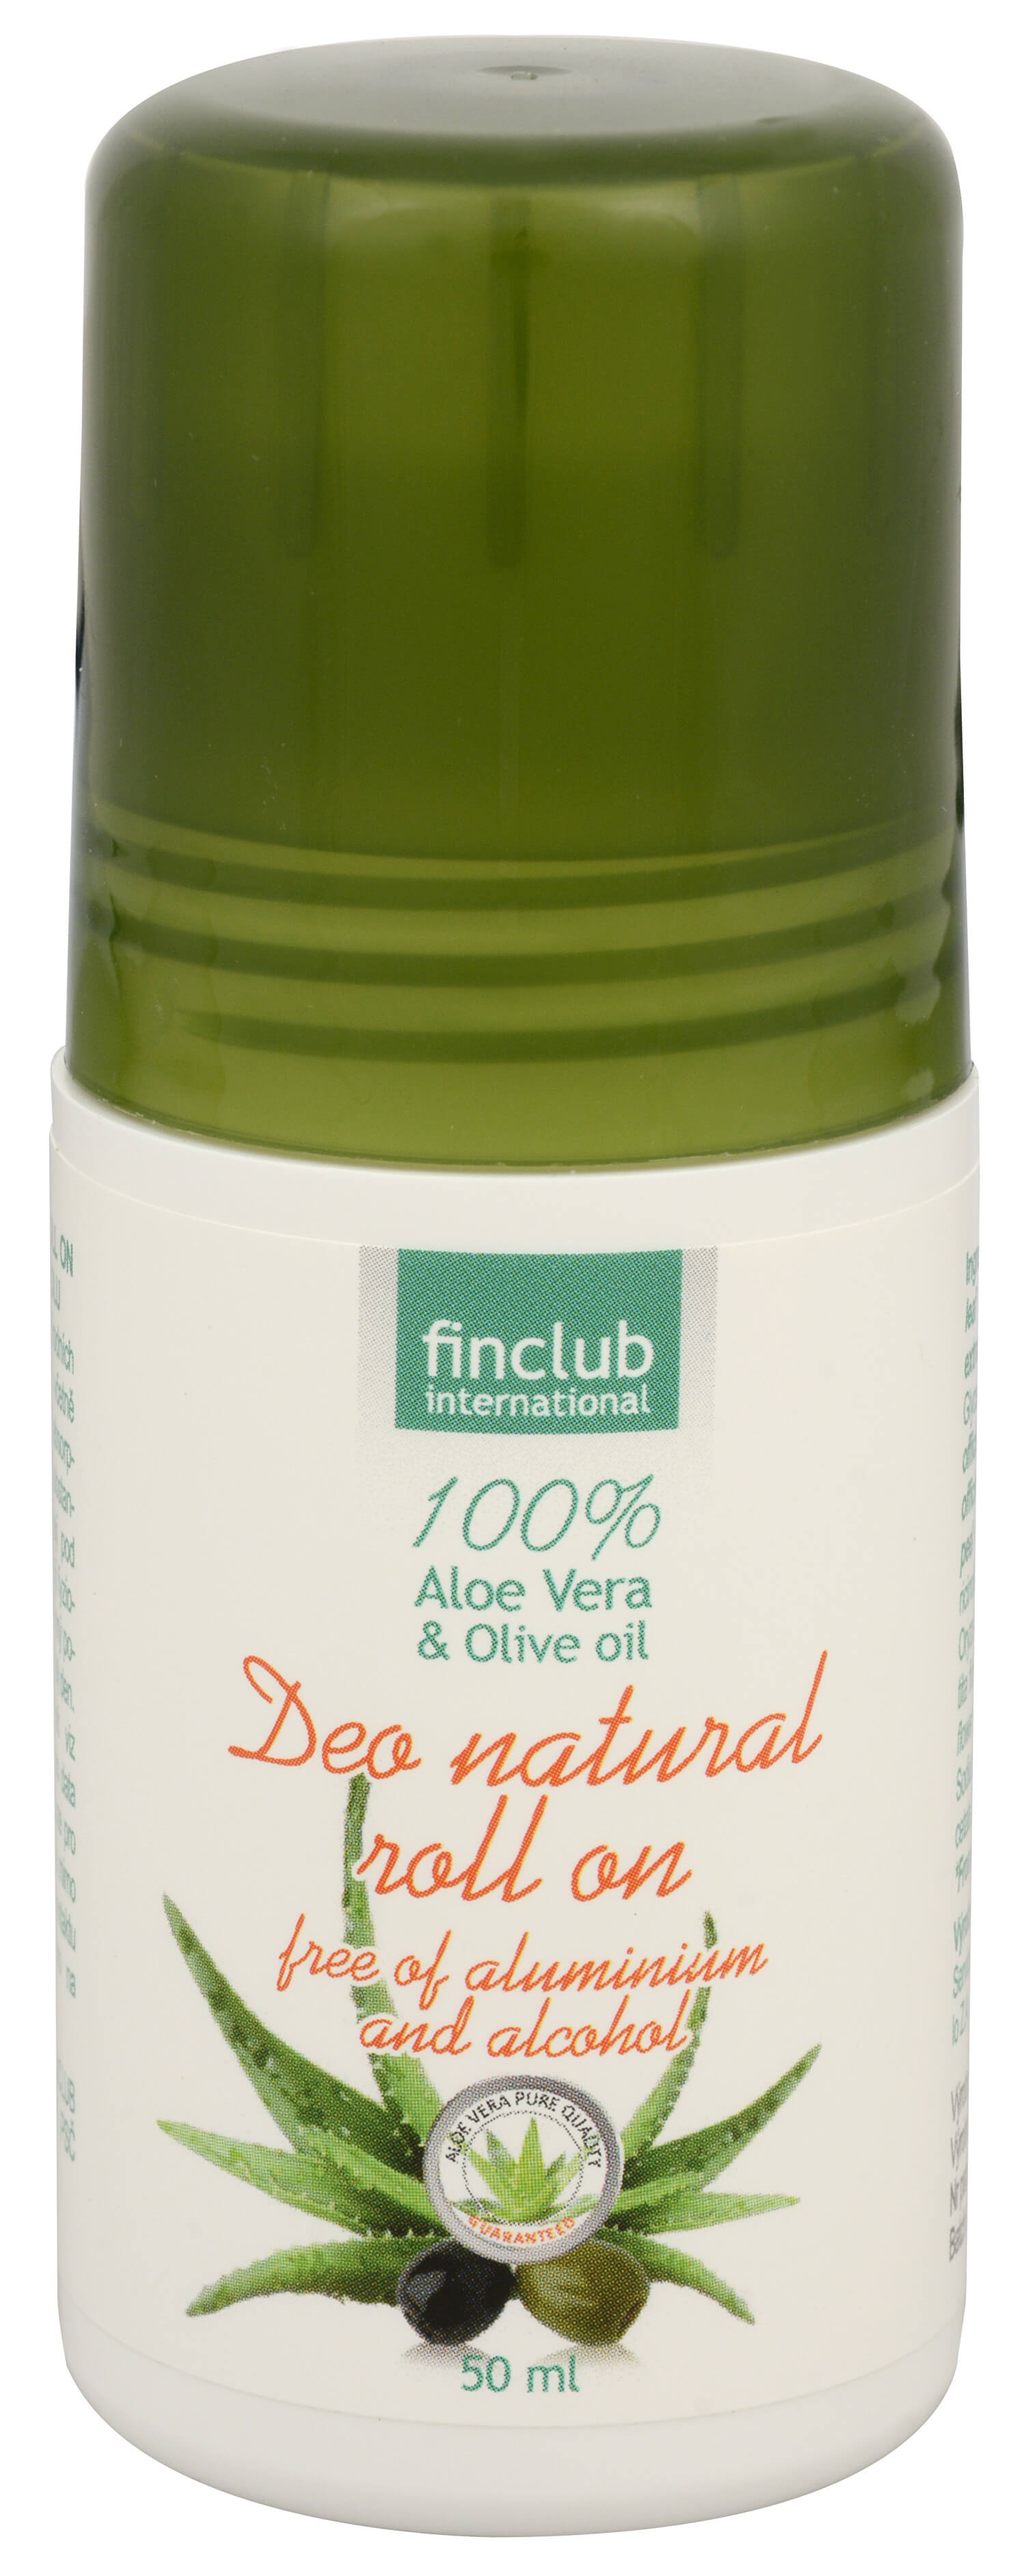 Finclub Aloe Vera roll-on 50 ml